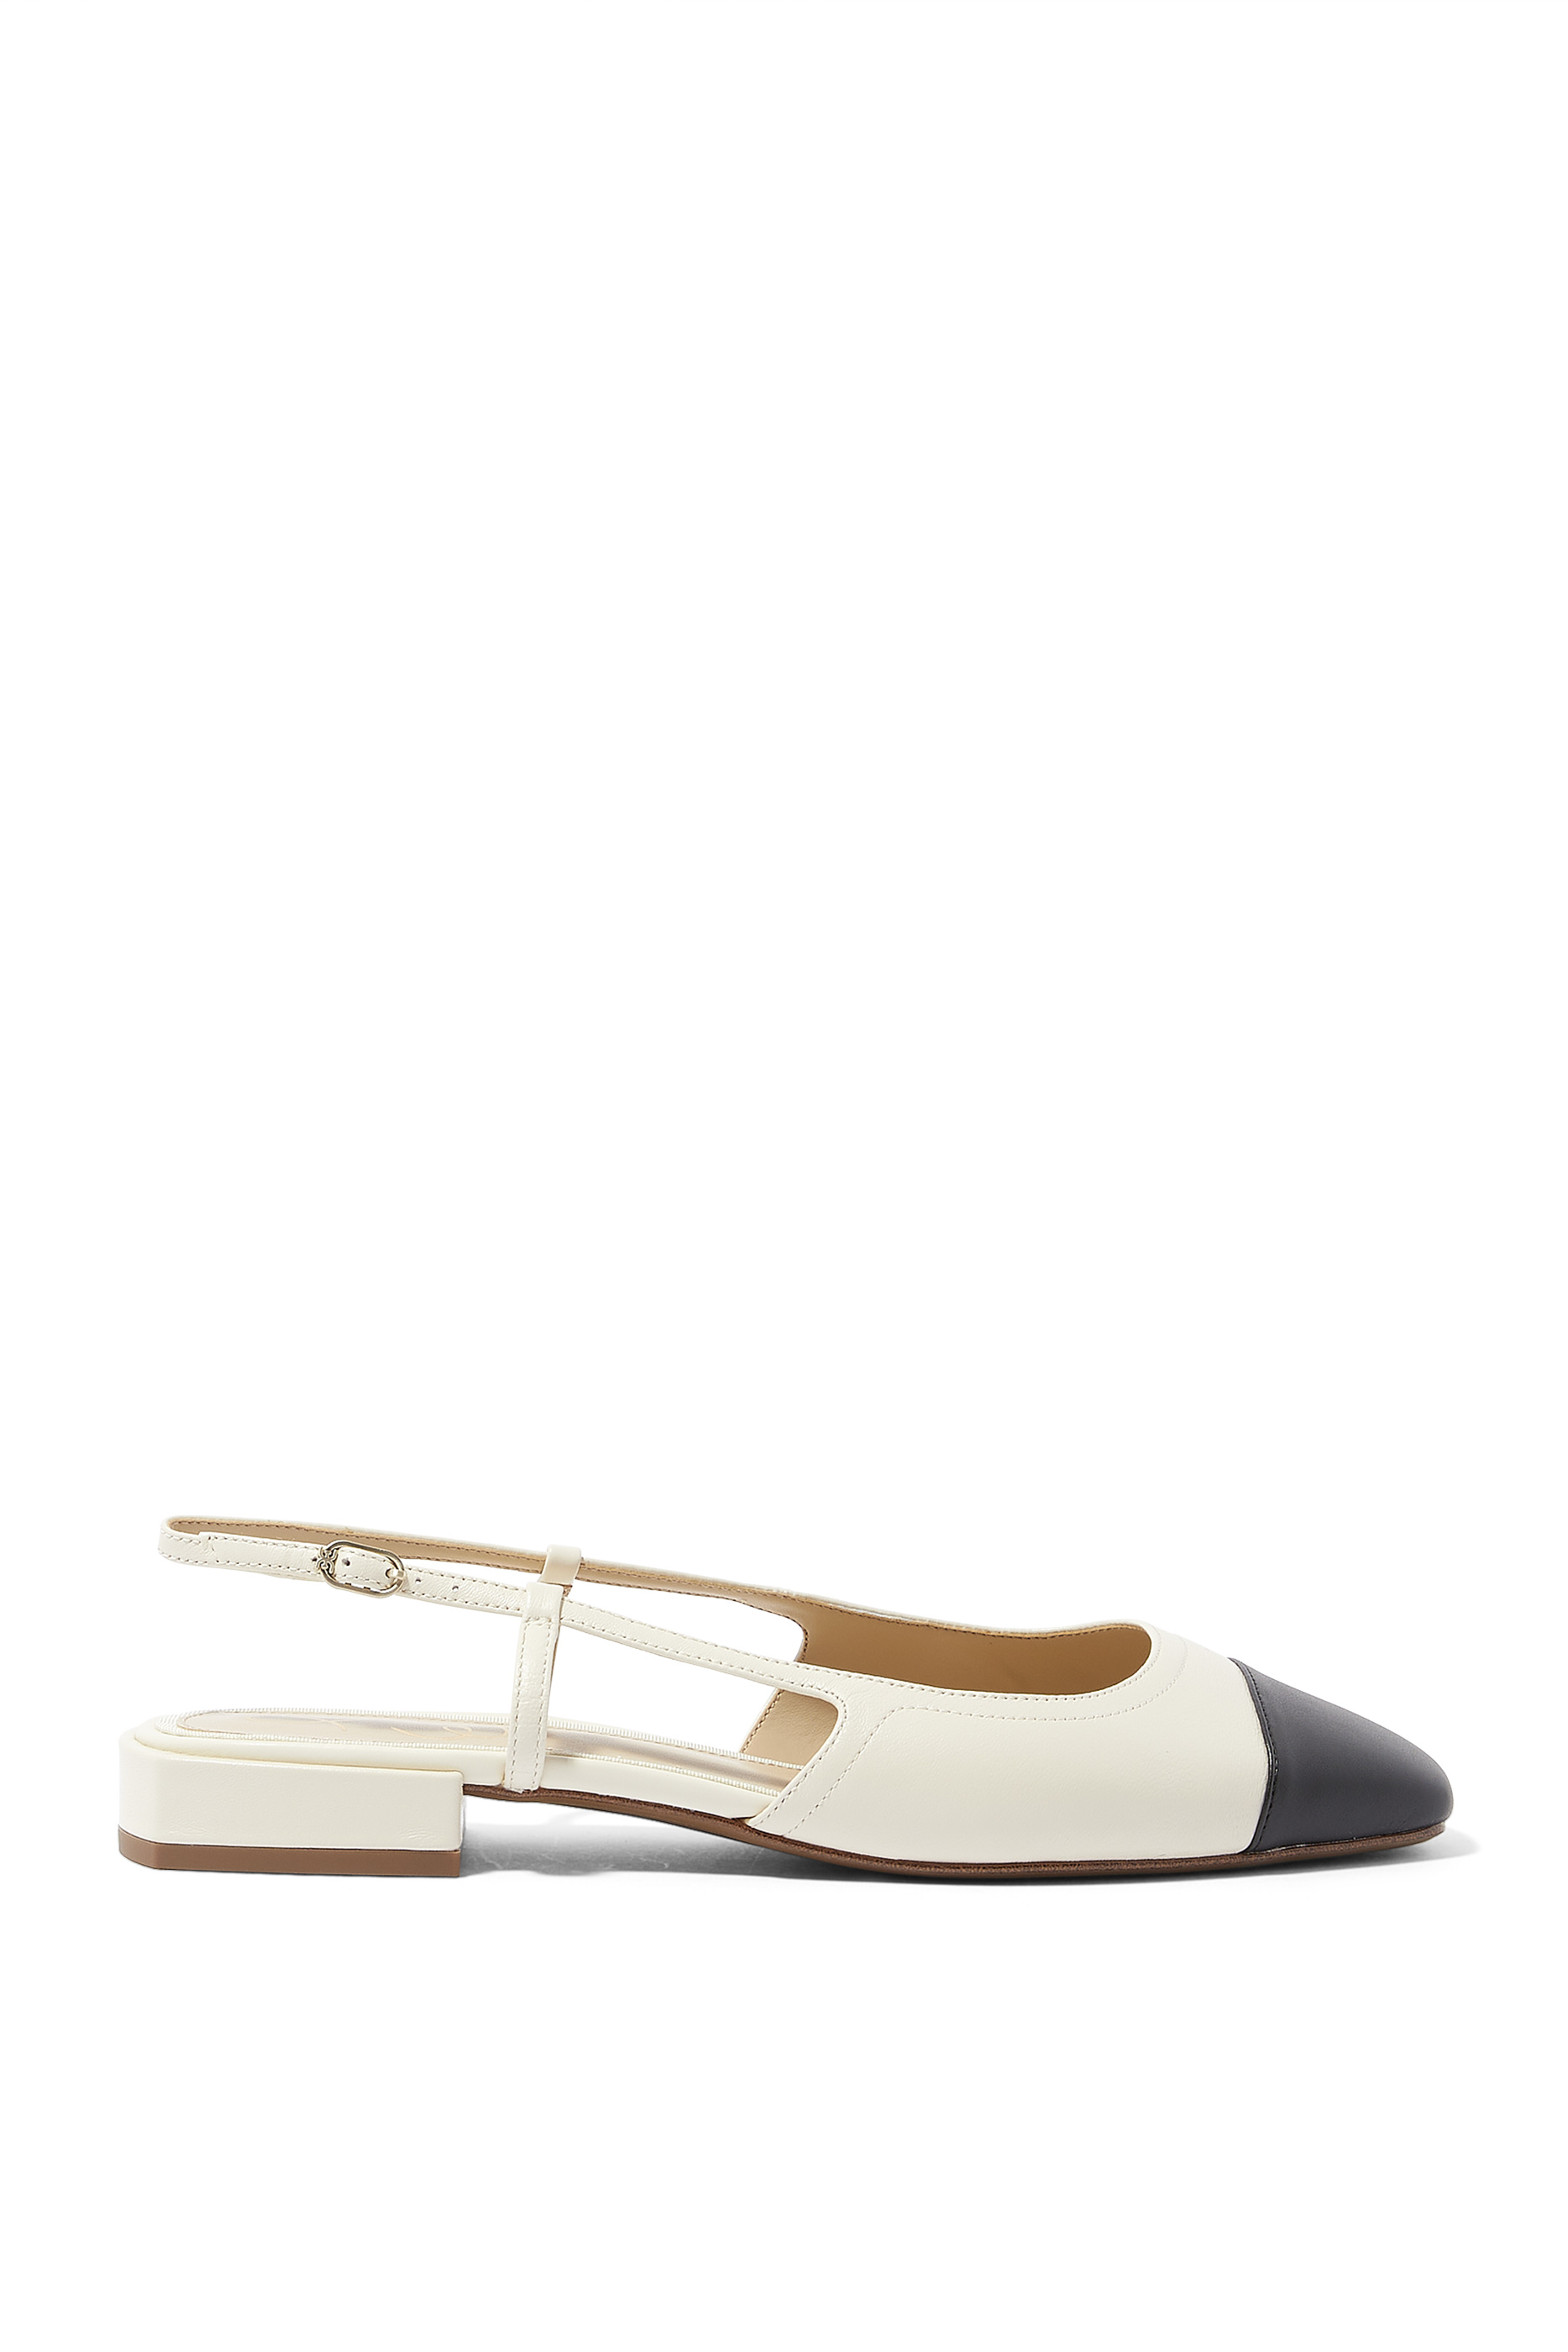 Buy Kara 25 Leather Slingback Sandals for SAR 435.00 | BloomingDales SA